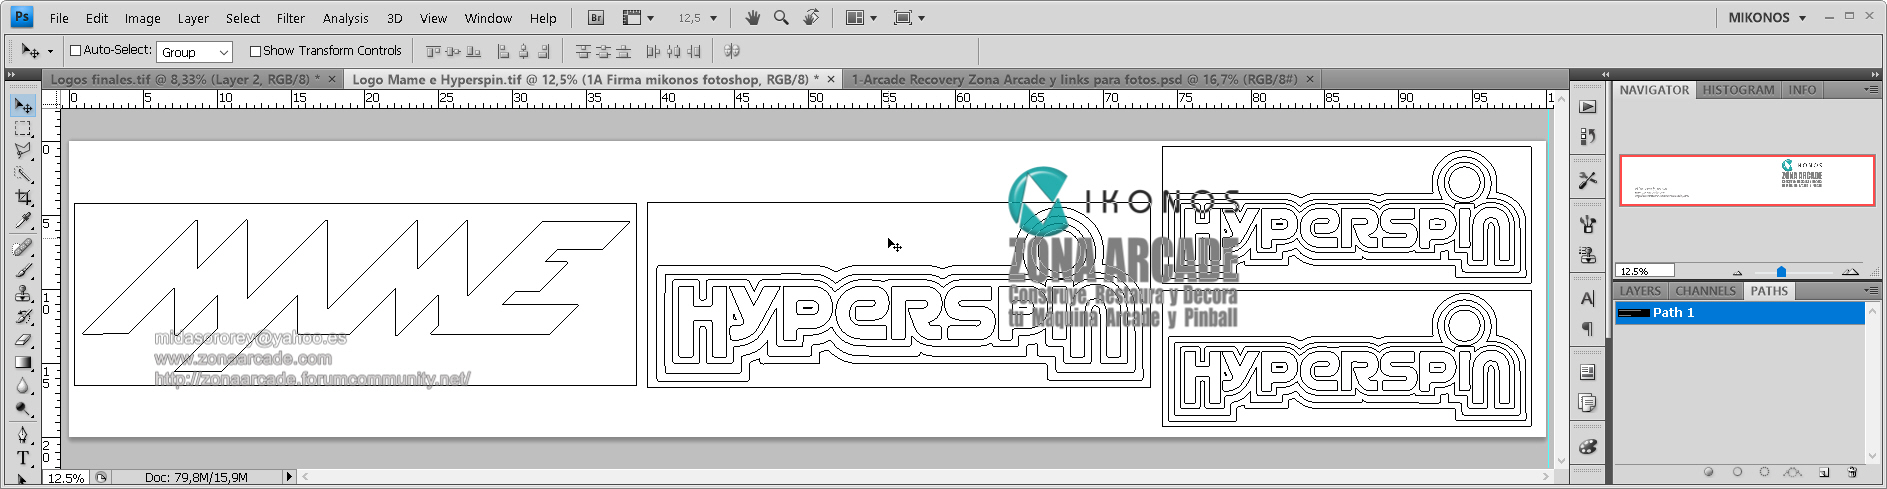 Hyperspin Mame Logos, Mikonos1